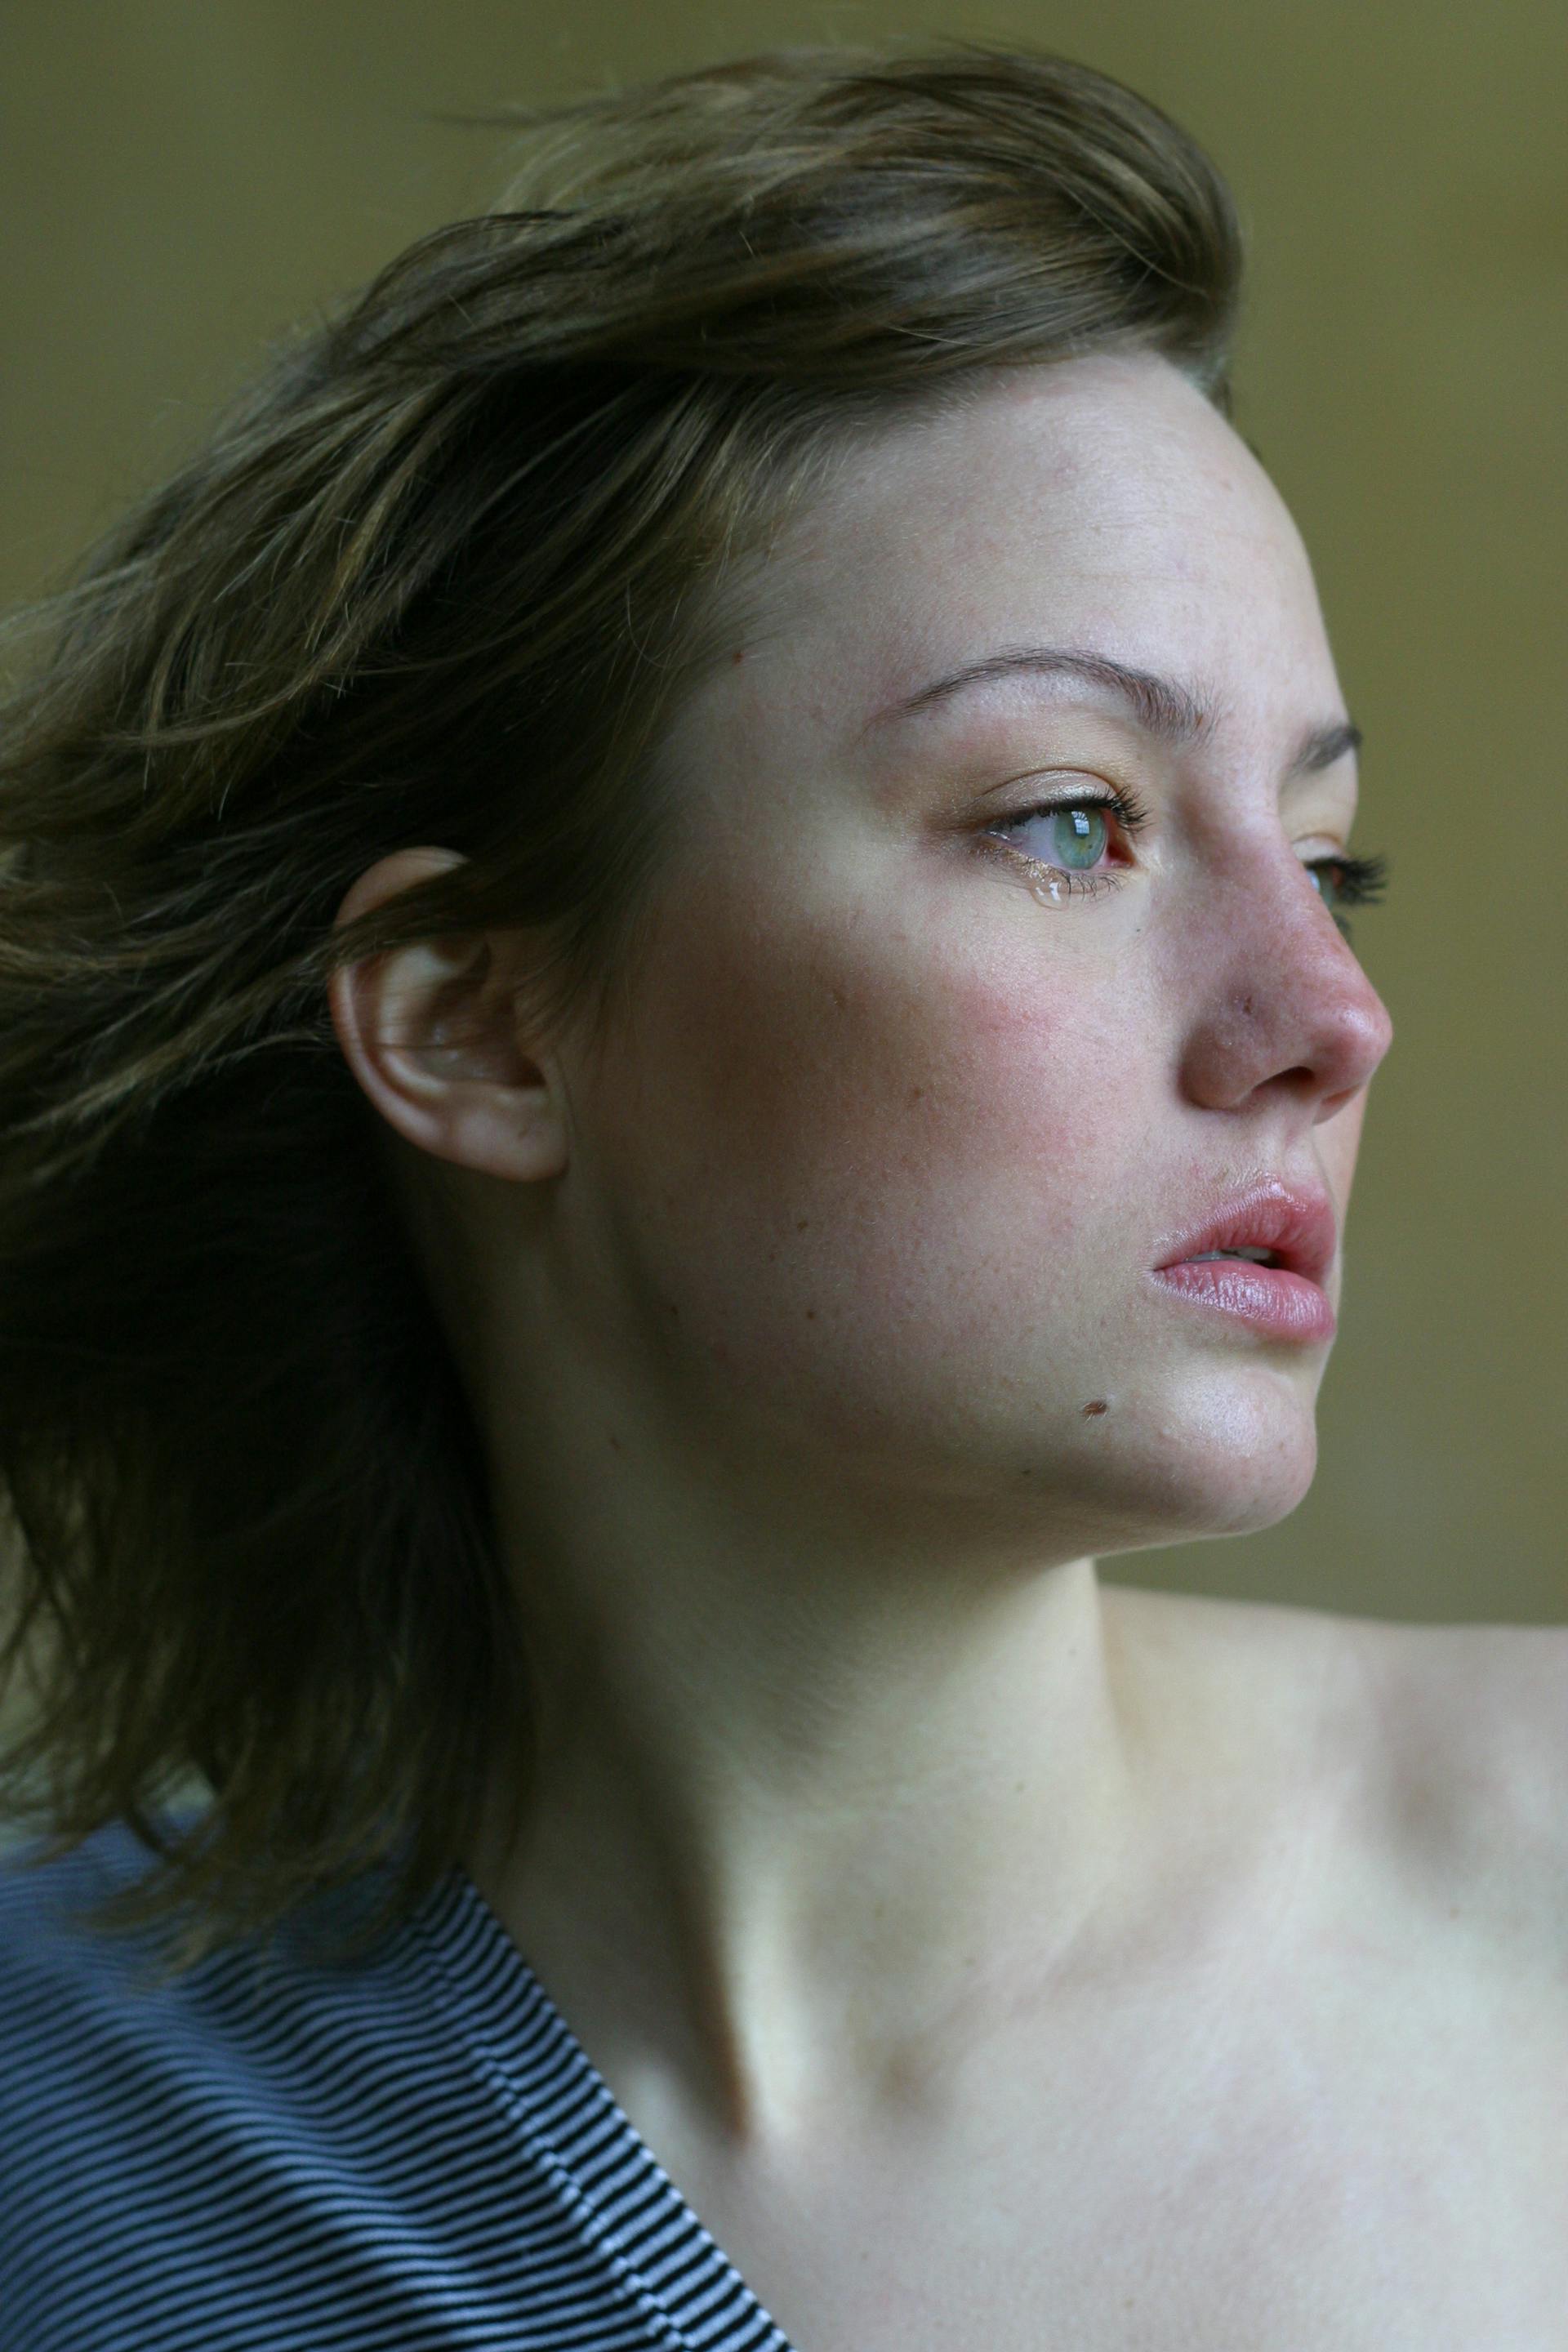 A teary-eyed woman looking sideways | Source: Pexels